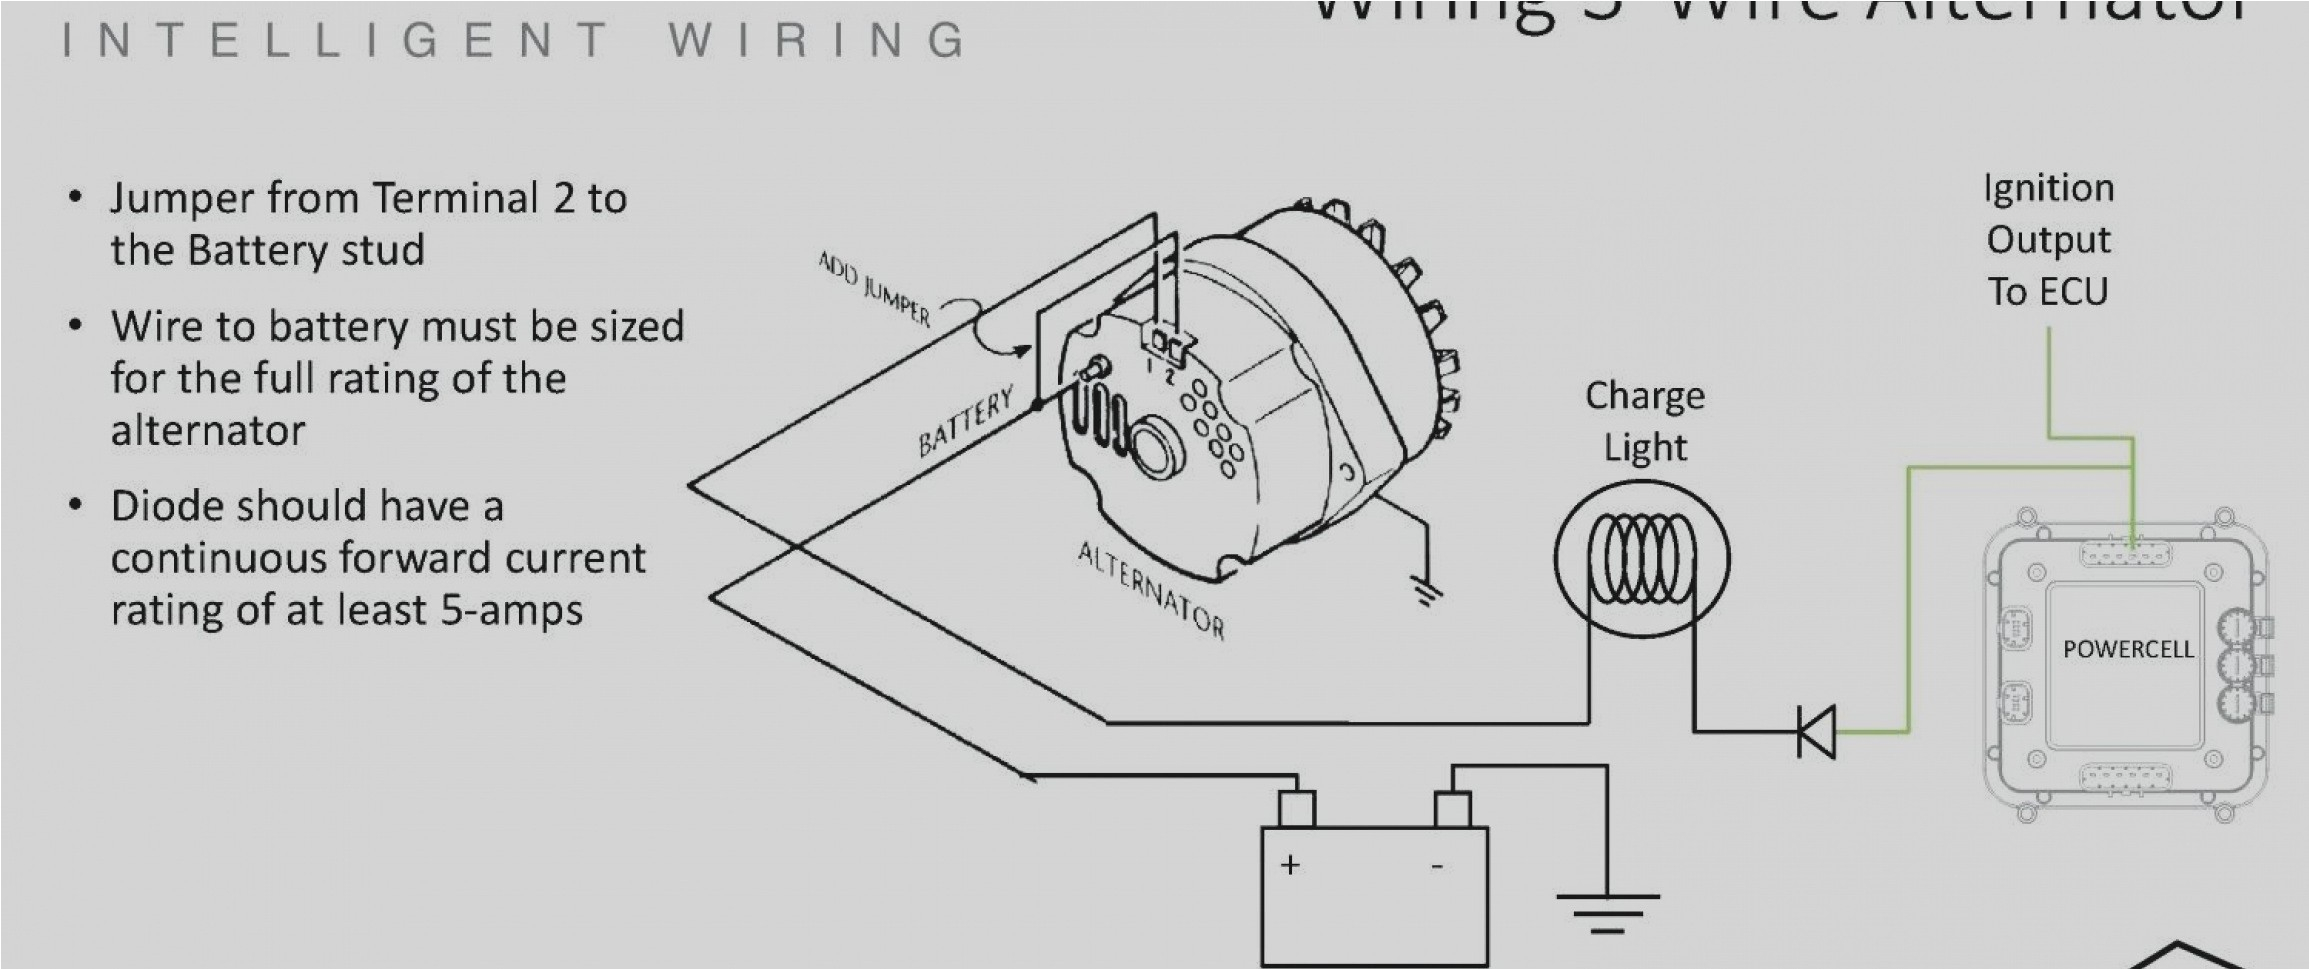 1988 rx7 alternator wiring diagram wiring diagram article 88 chevy alternator wiring wiring diagram technicals 1988